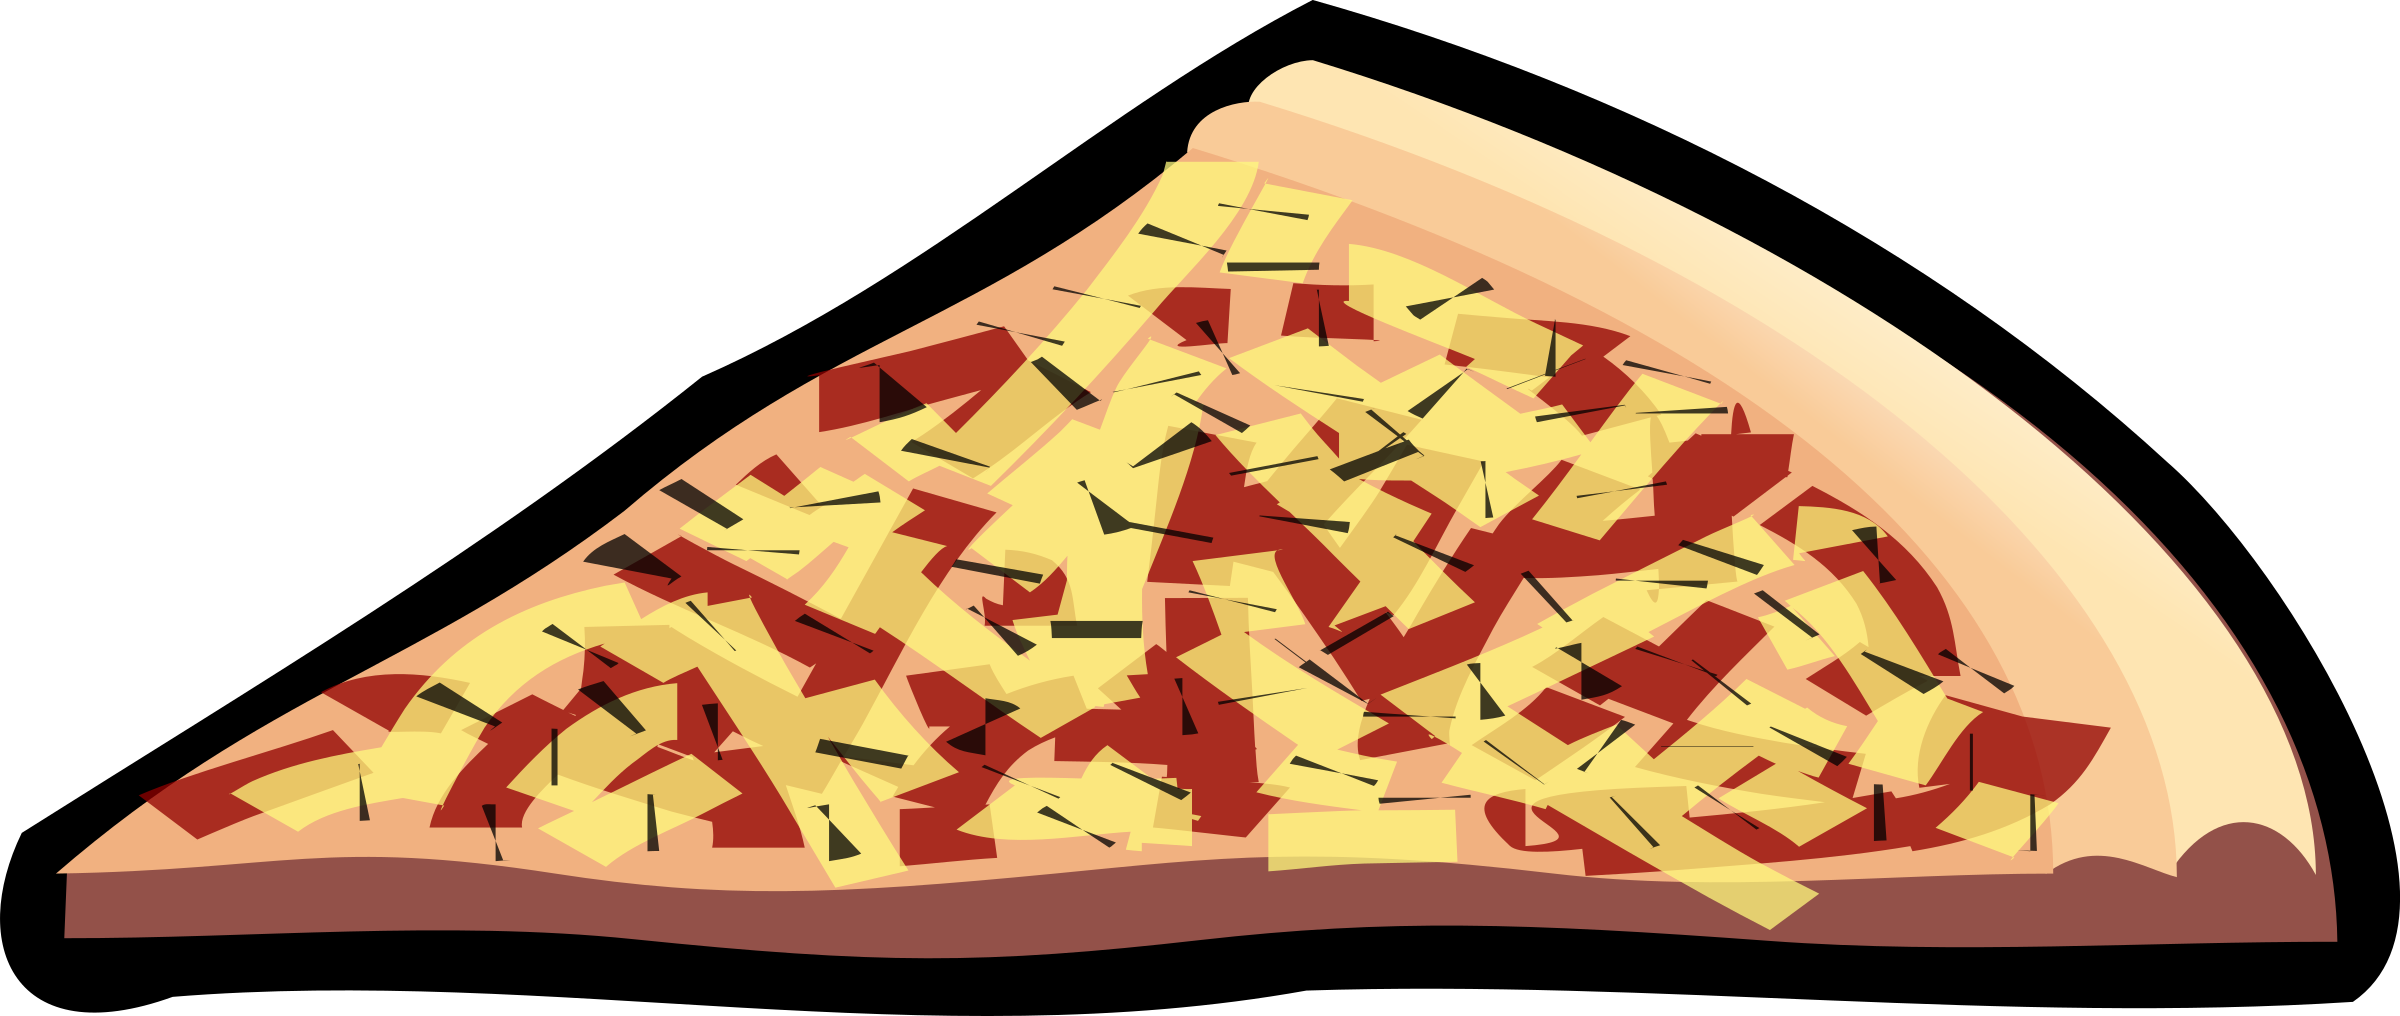 triangular clipart pizza slice